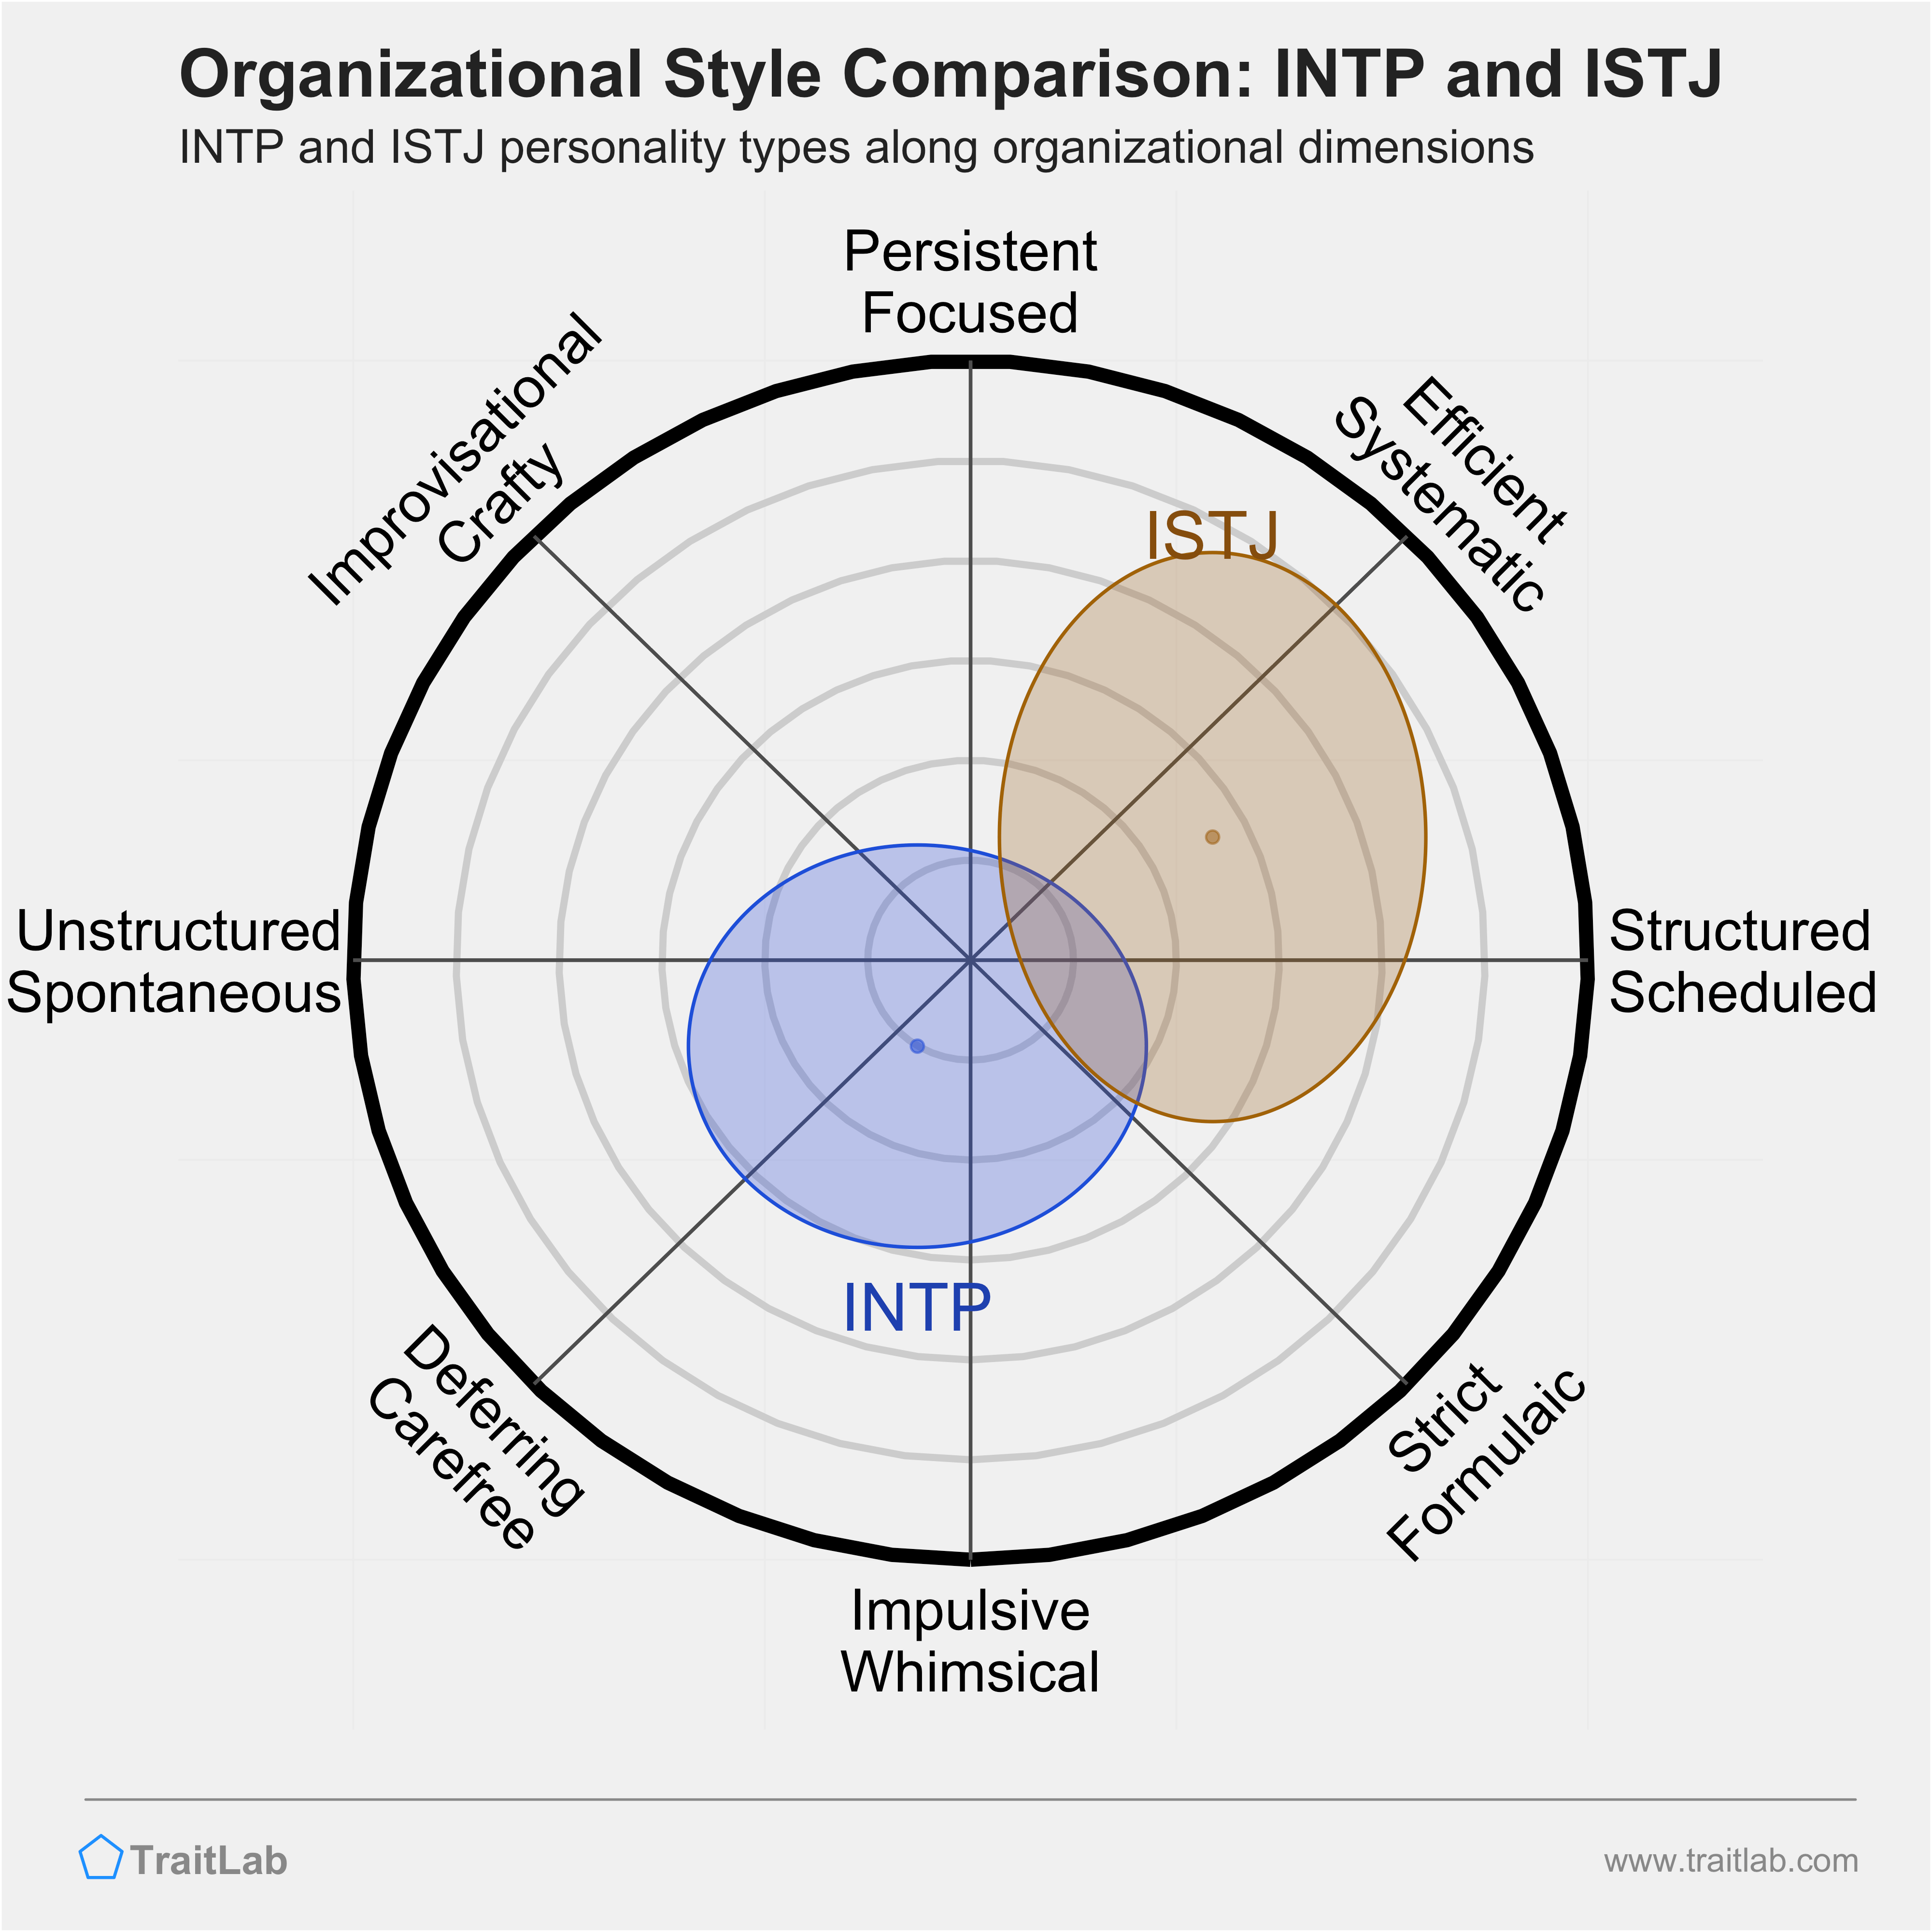 INTP and ISTJ comparison across organizational dimensions